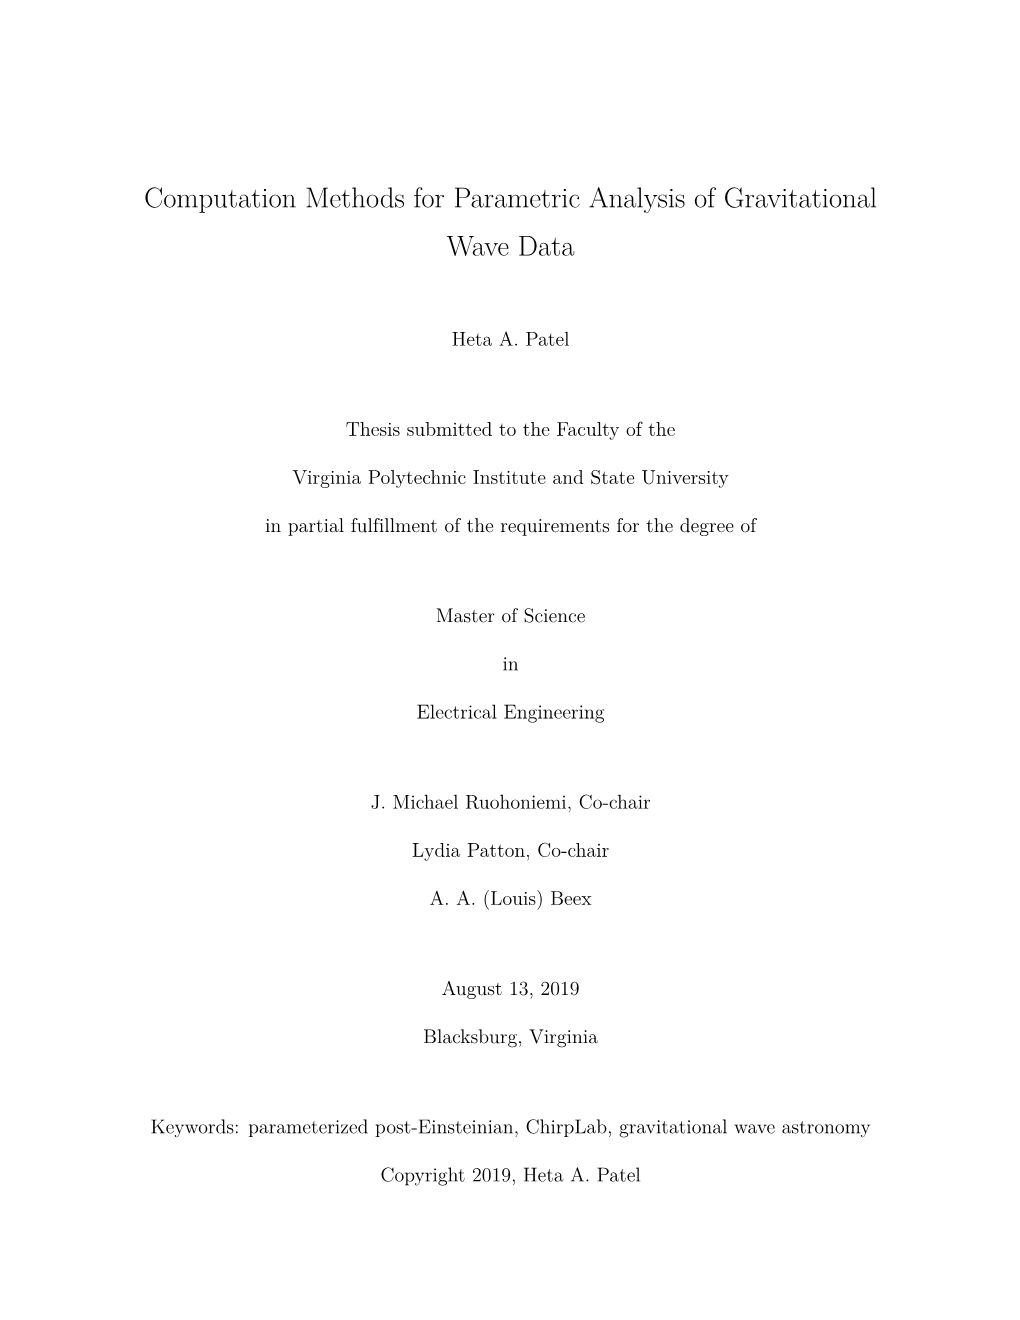 Computation Methods for Parametric Analysis of Gravitational Wave Data